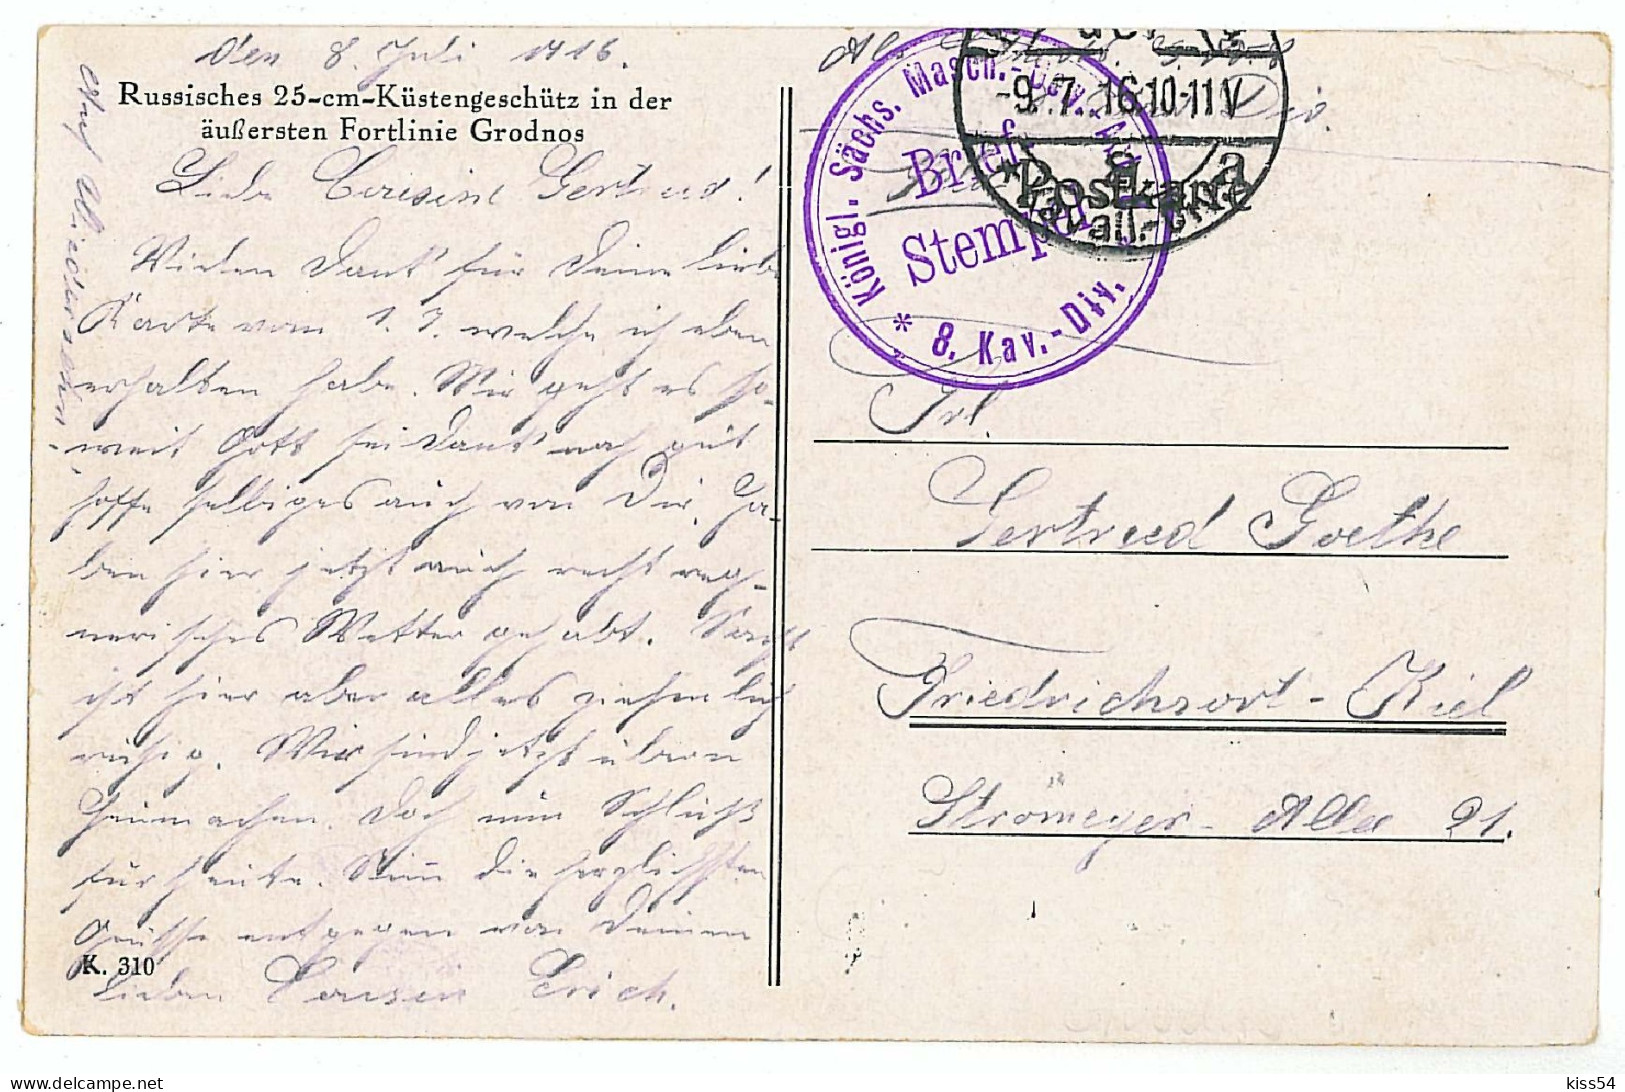 BL 11 - 7613 GRODNO, Belarus, Russian Soldiers On Gun - Old Postcard, CENSOR - Used - 1916 - Belarus